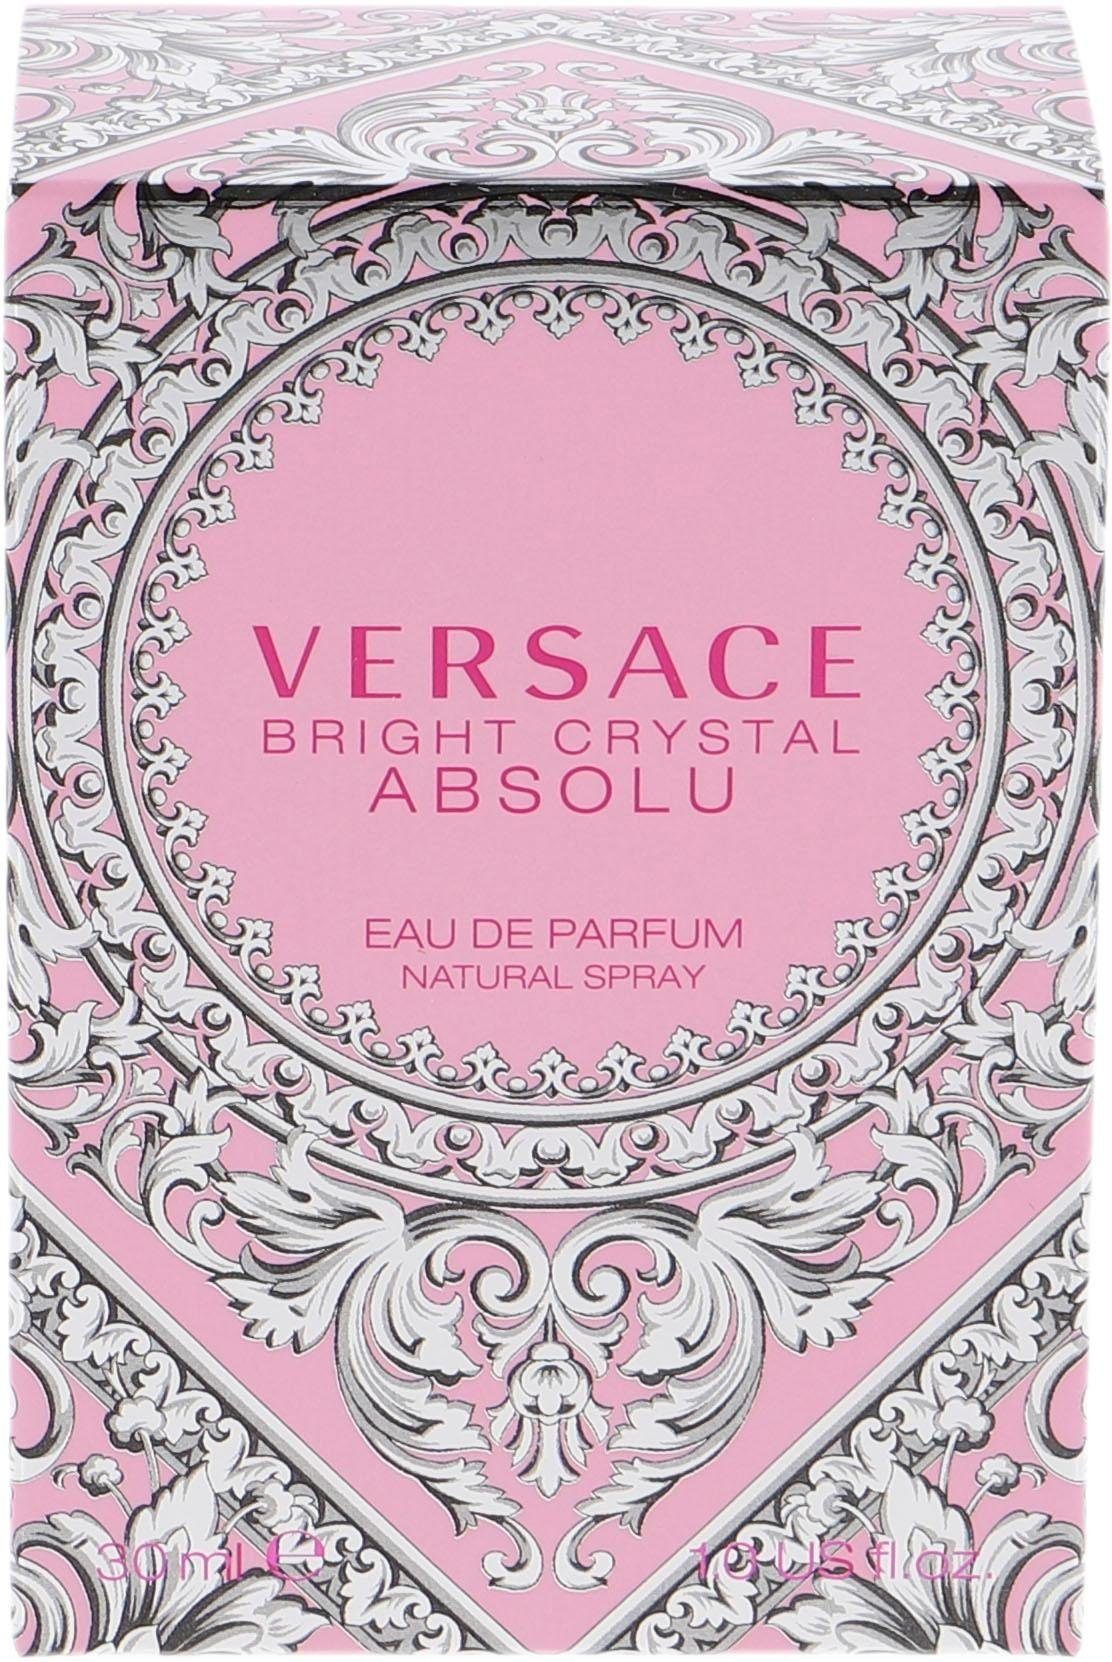 Versace Eau de Parfum Versace Absolu Crystal Bright